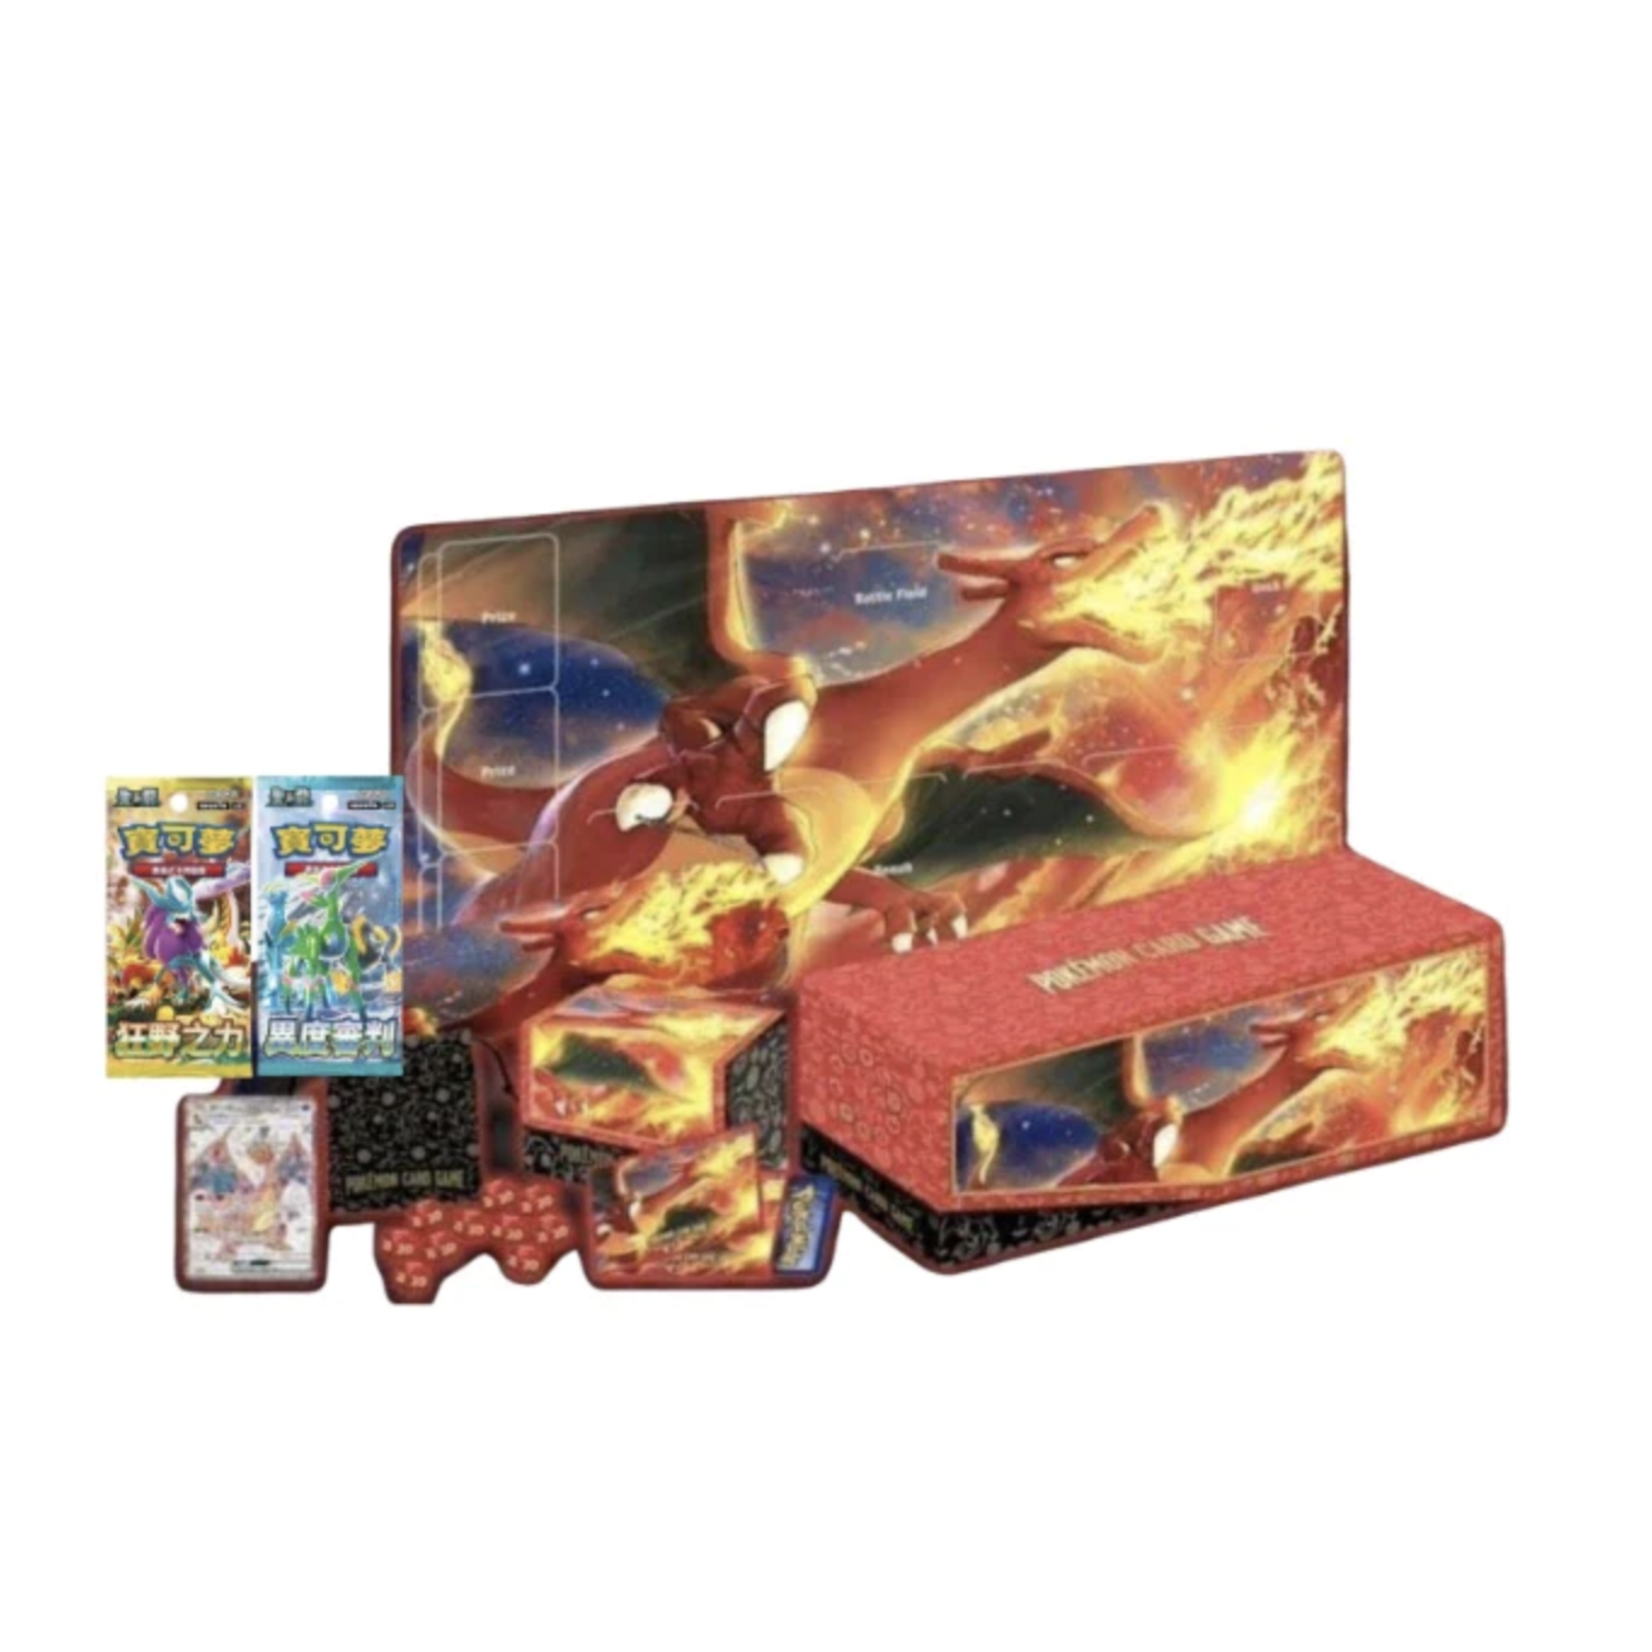 Pokémon Top Collector's Box - Charizard